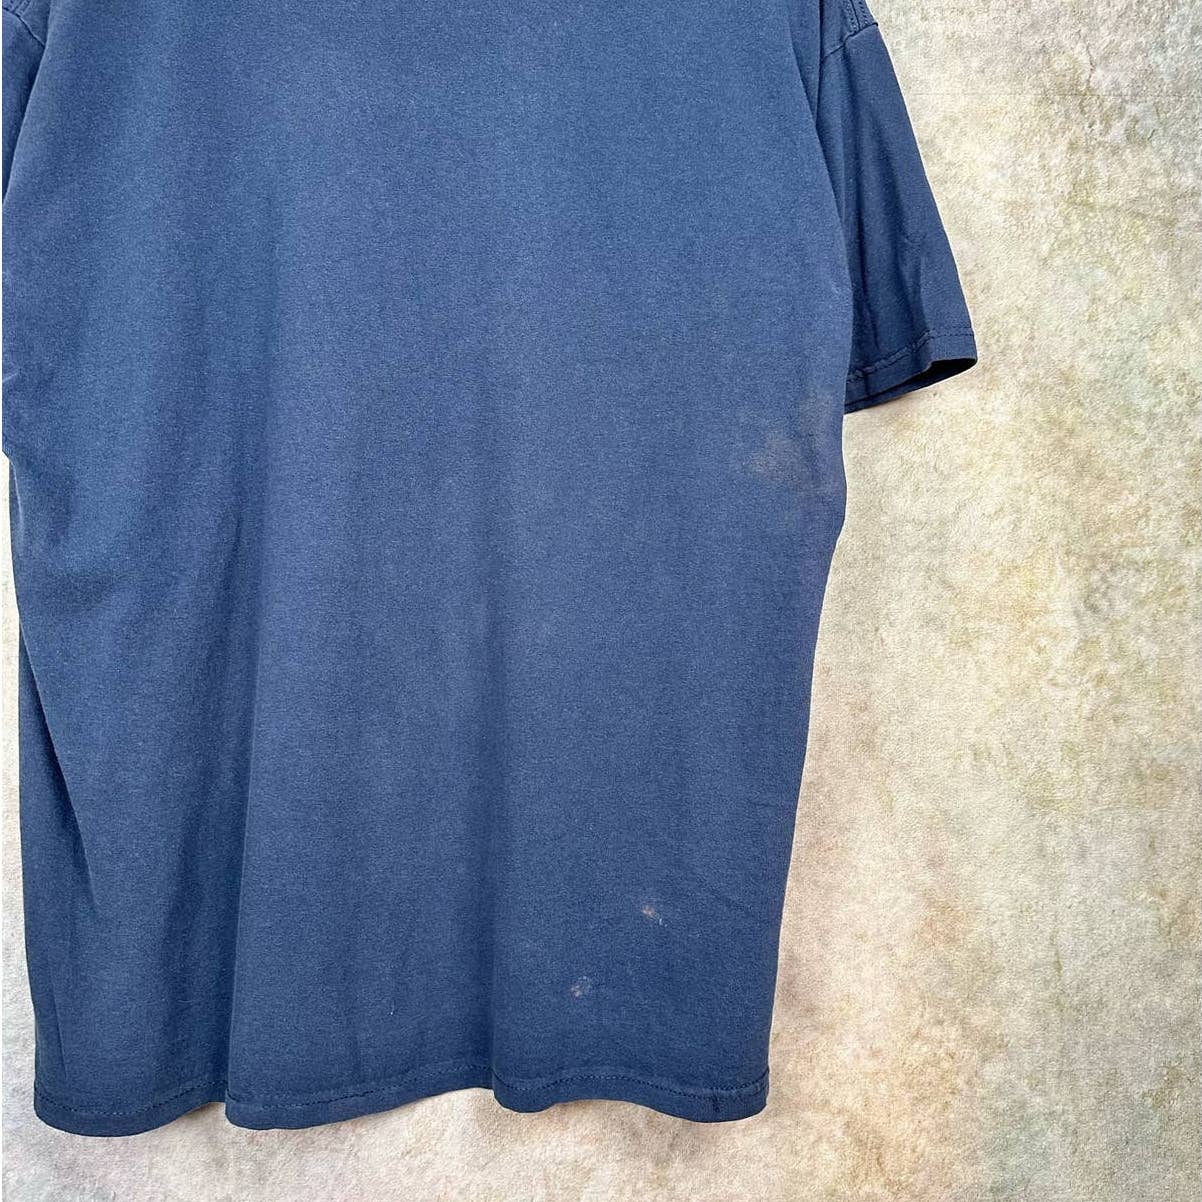 Vintage Niagara Falls T Shirt XL